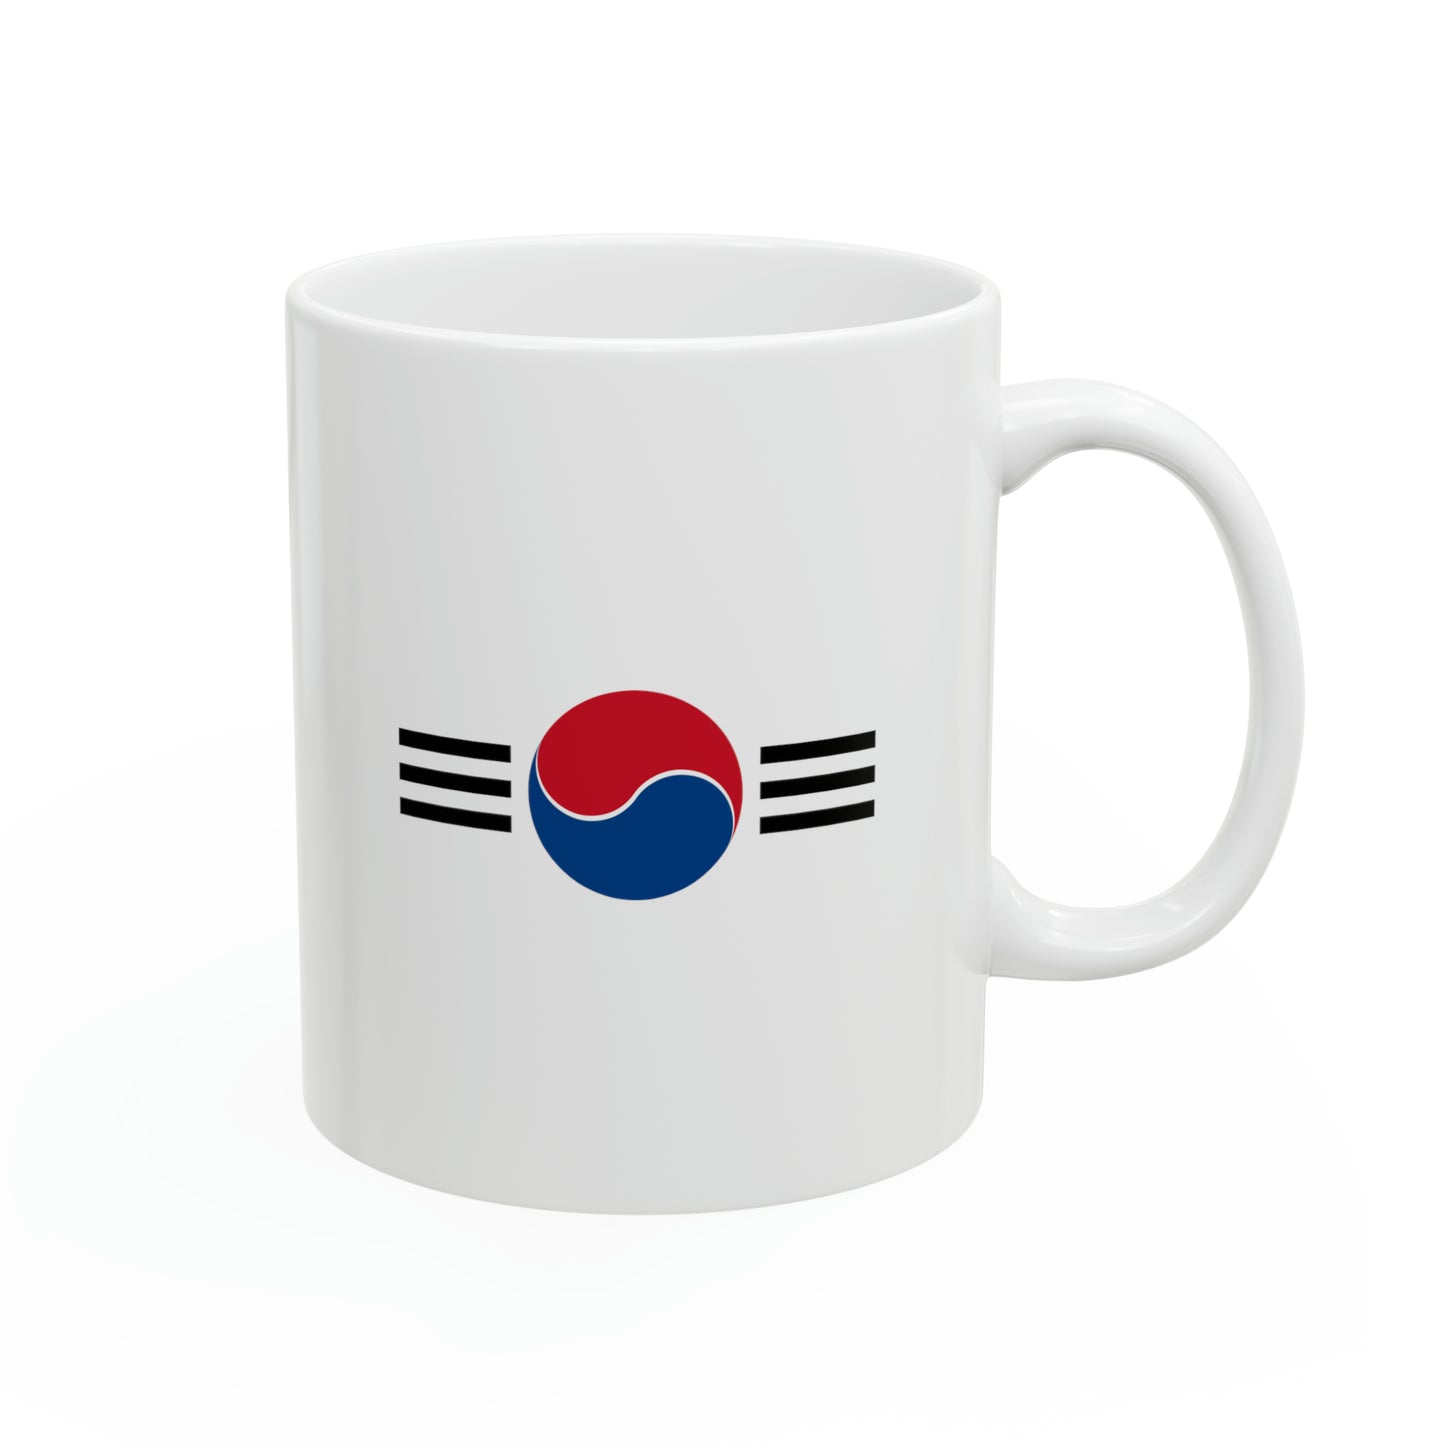 South Korean Air Force Roundel Coffee Mug - Double Sided White Ceramic 11oz - By TheGlassyLass.com